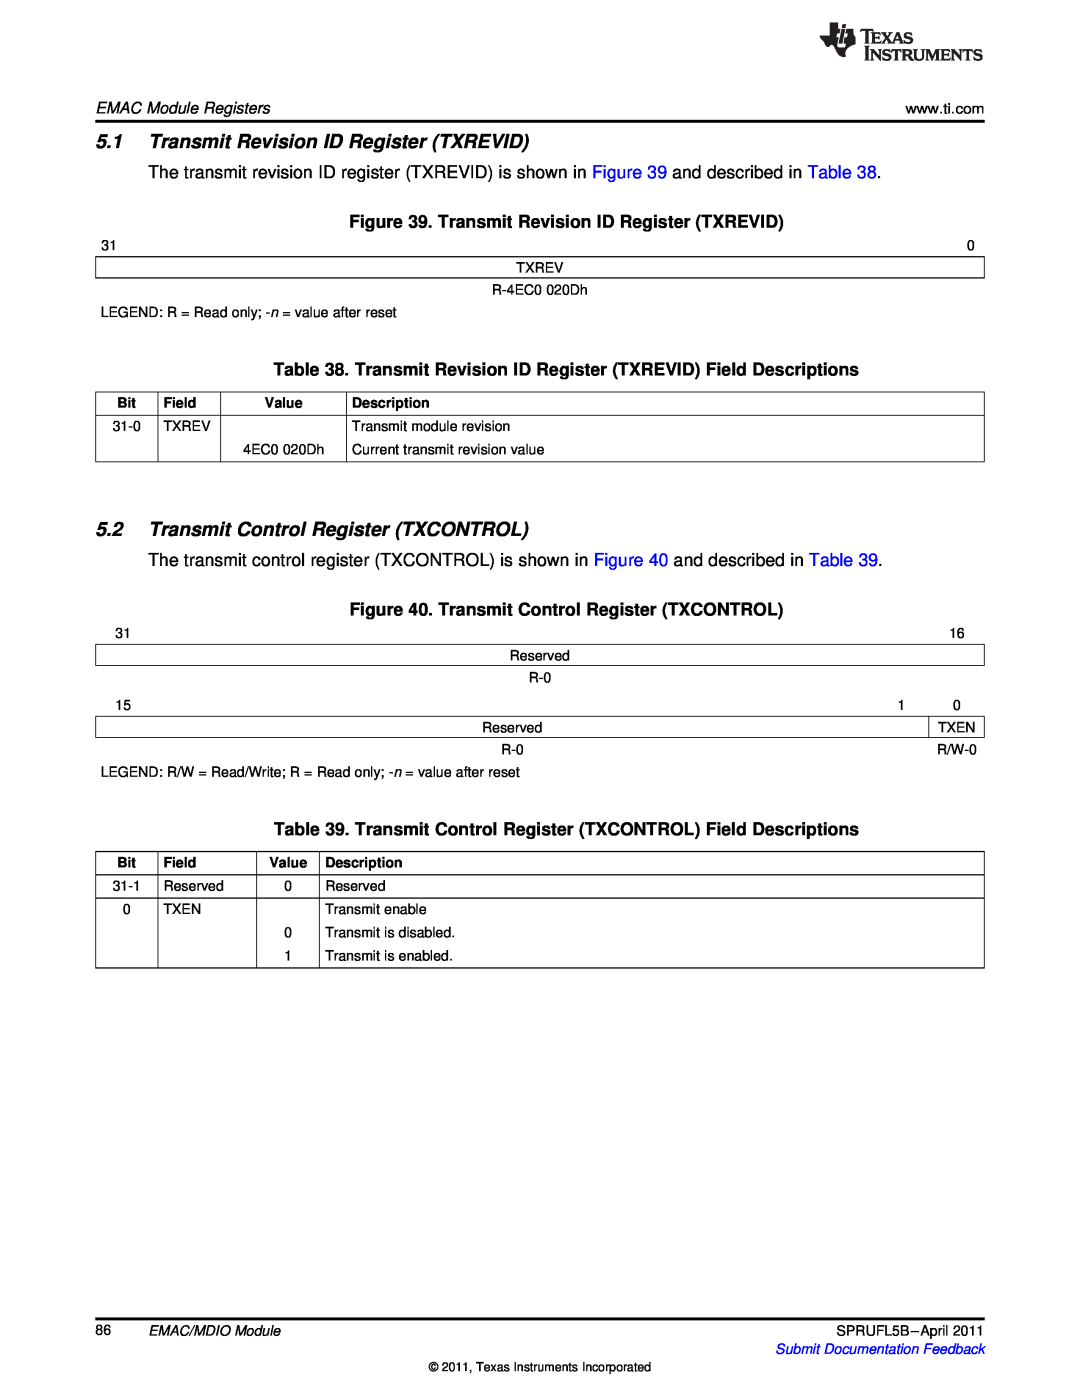 Texas Instruments TMS320C674X manual Transmit Revision ID Register TXREVID, Transmit Control Register TXCONTROL 